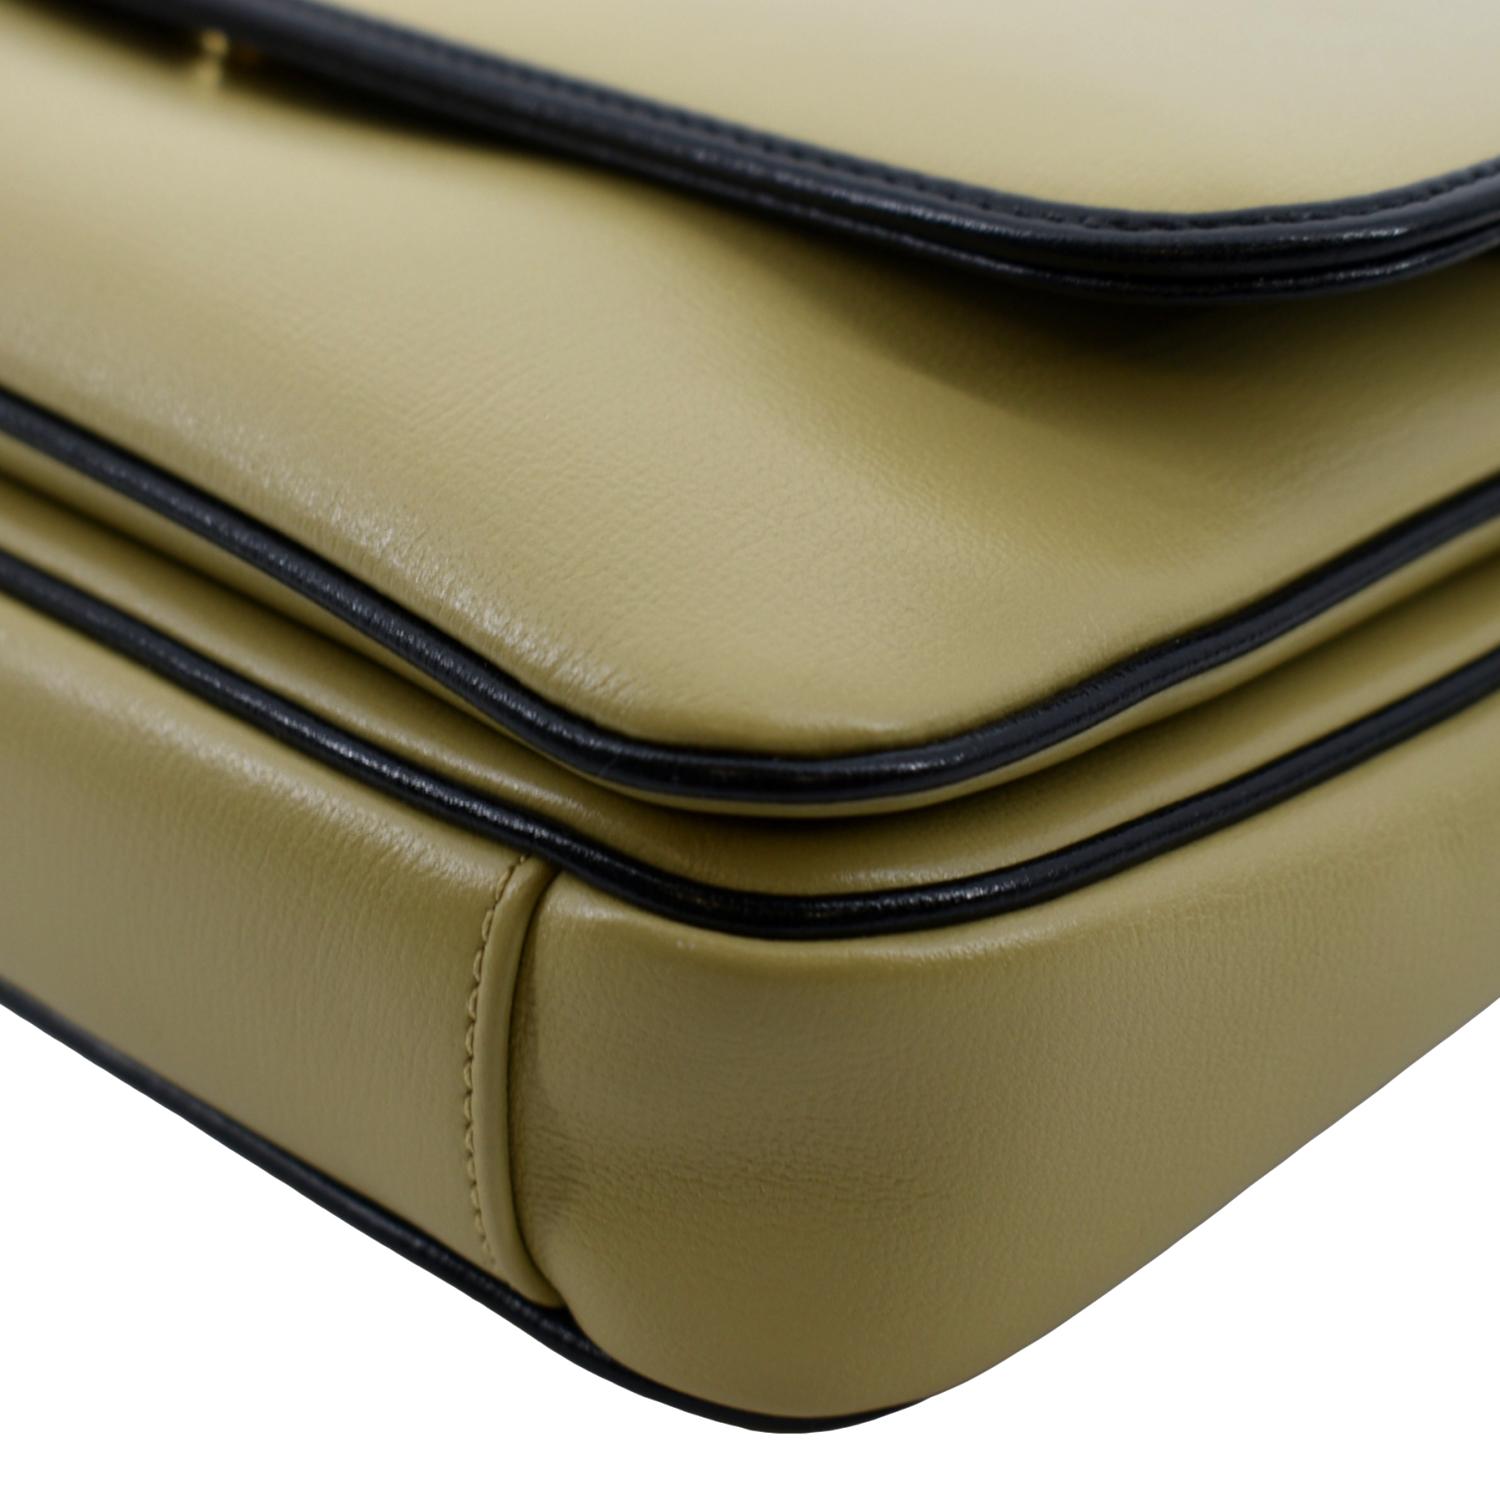 Gucci Linea Marina Small Leather Chain Shoulder Bag - DDH